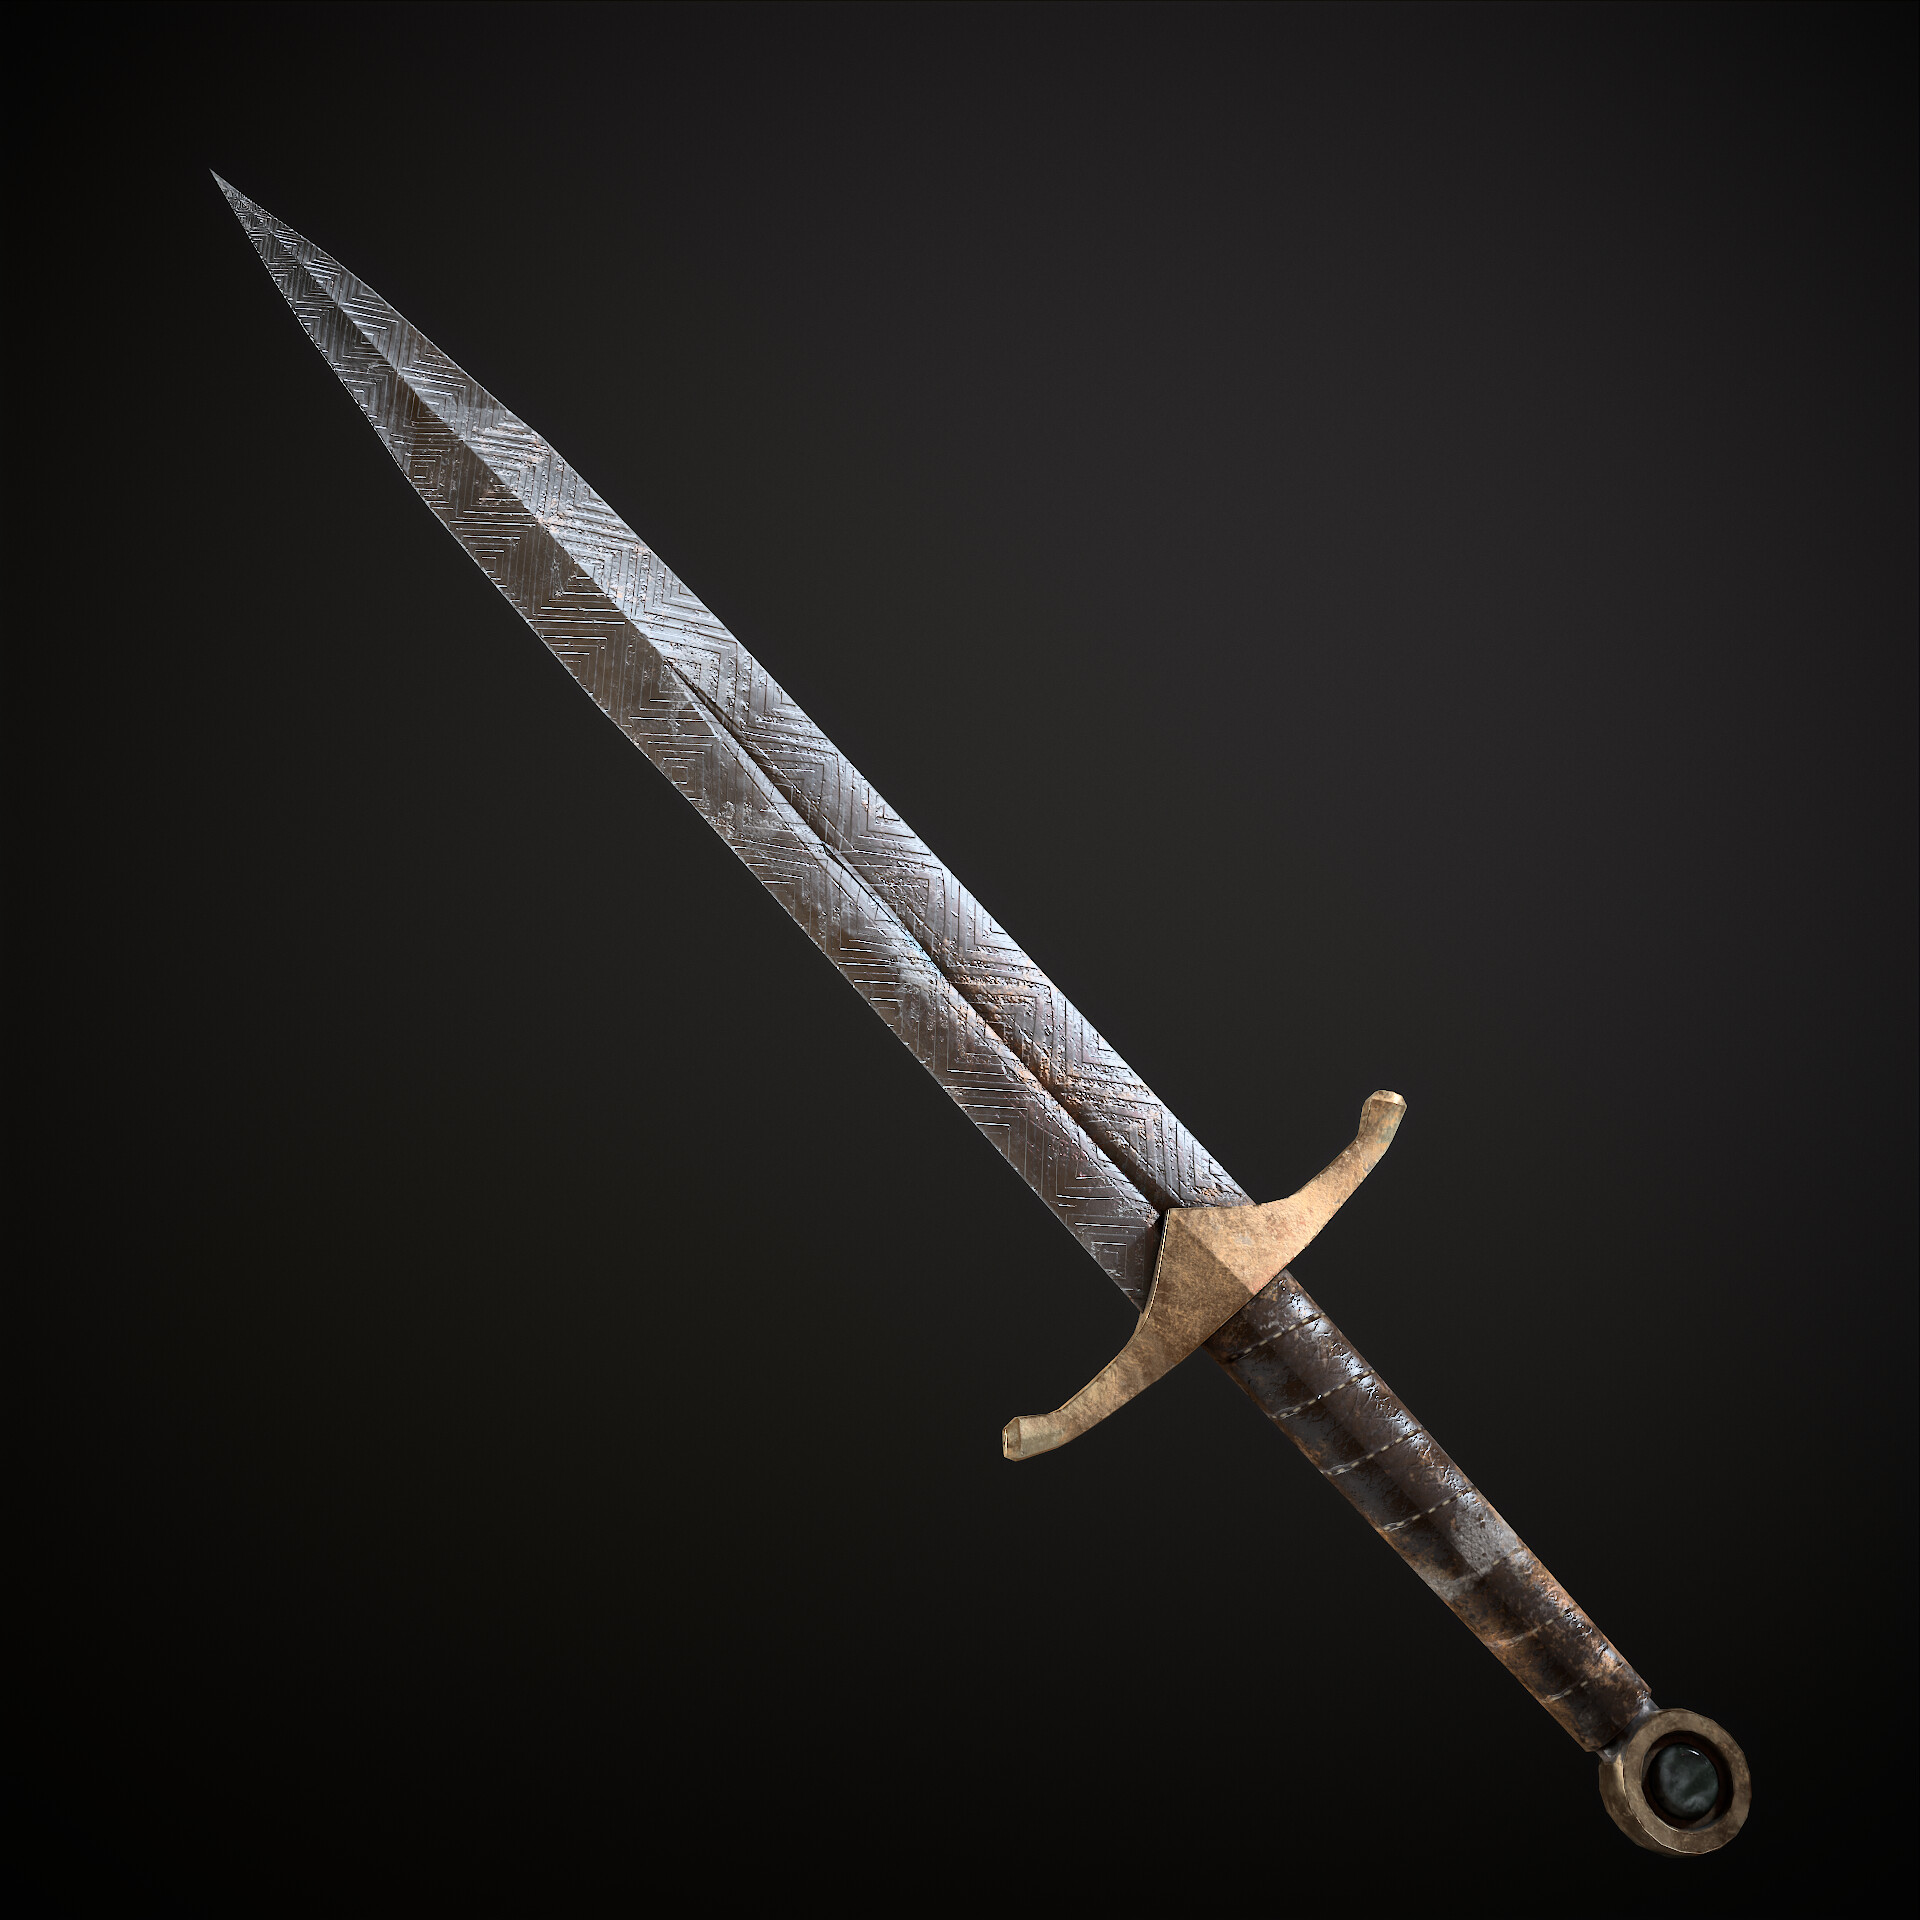 ArtStation - Steel dagger